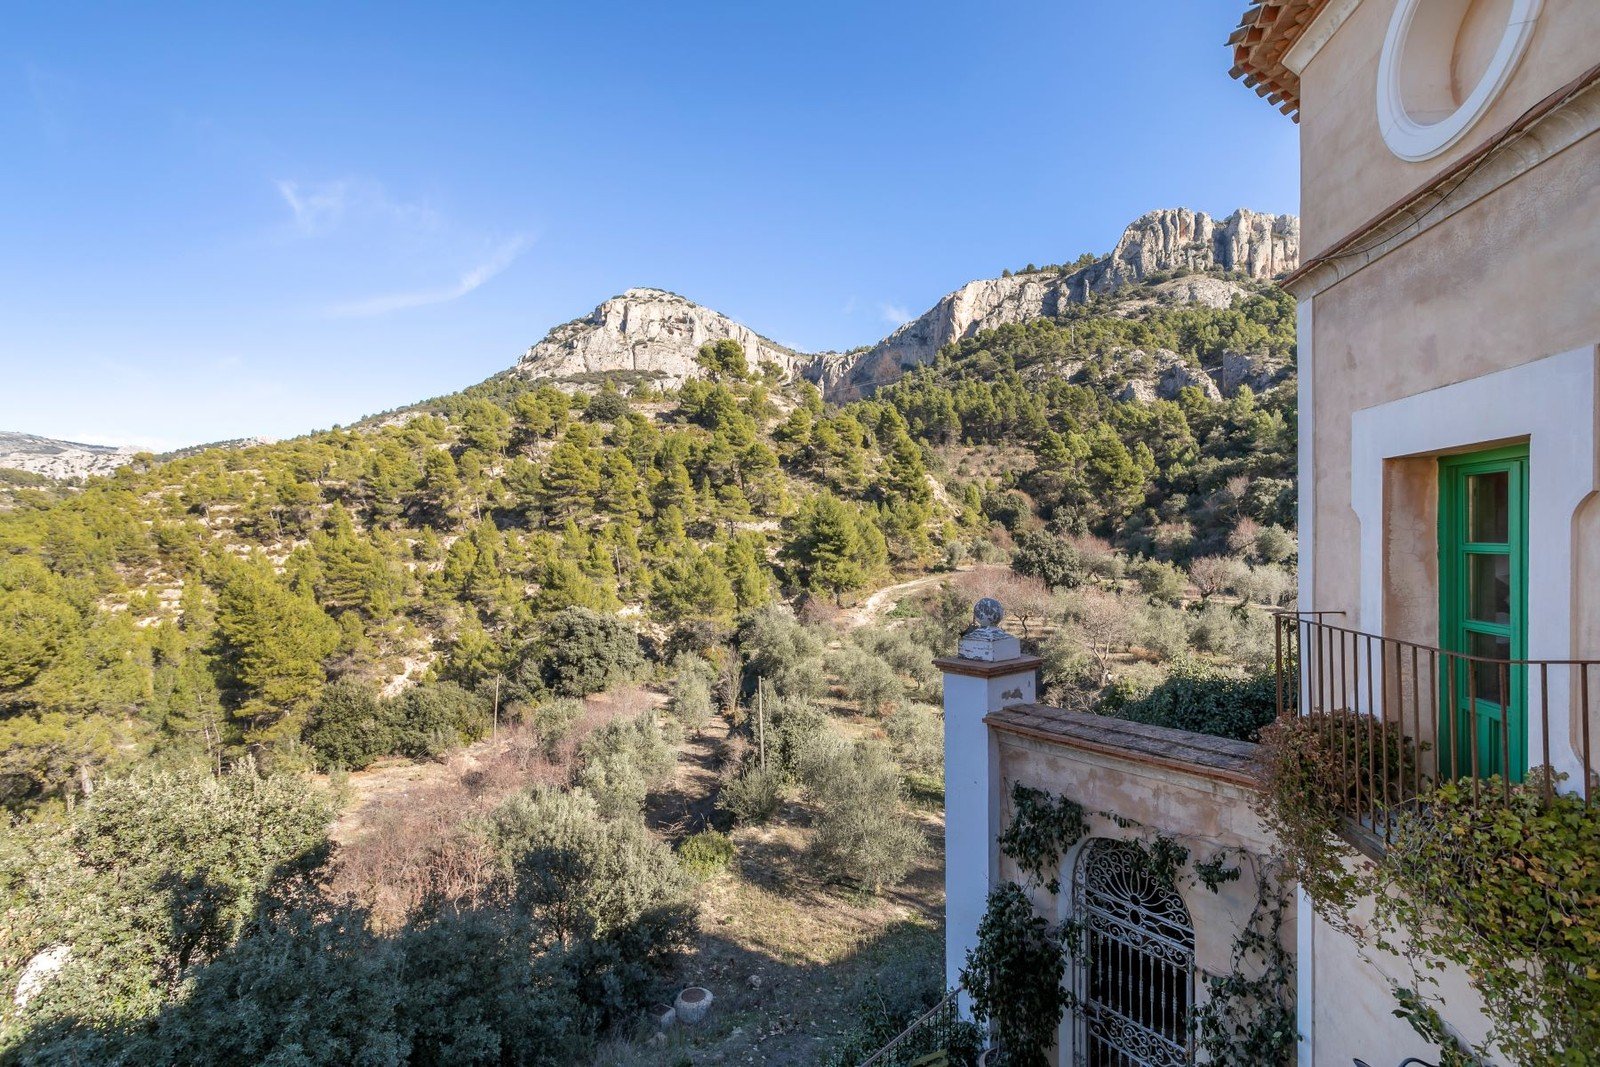 Francis York Stunning Hacienda in the Costa Blanca Hills Near Alicante, Spain 00012.jpeg